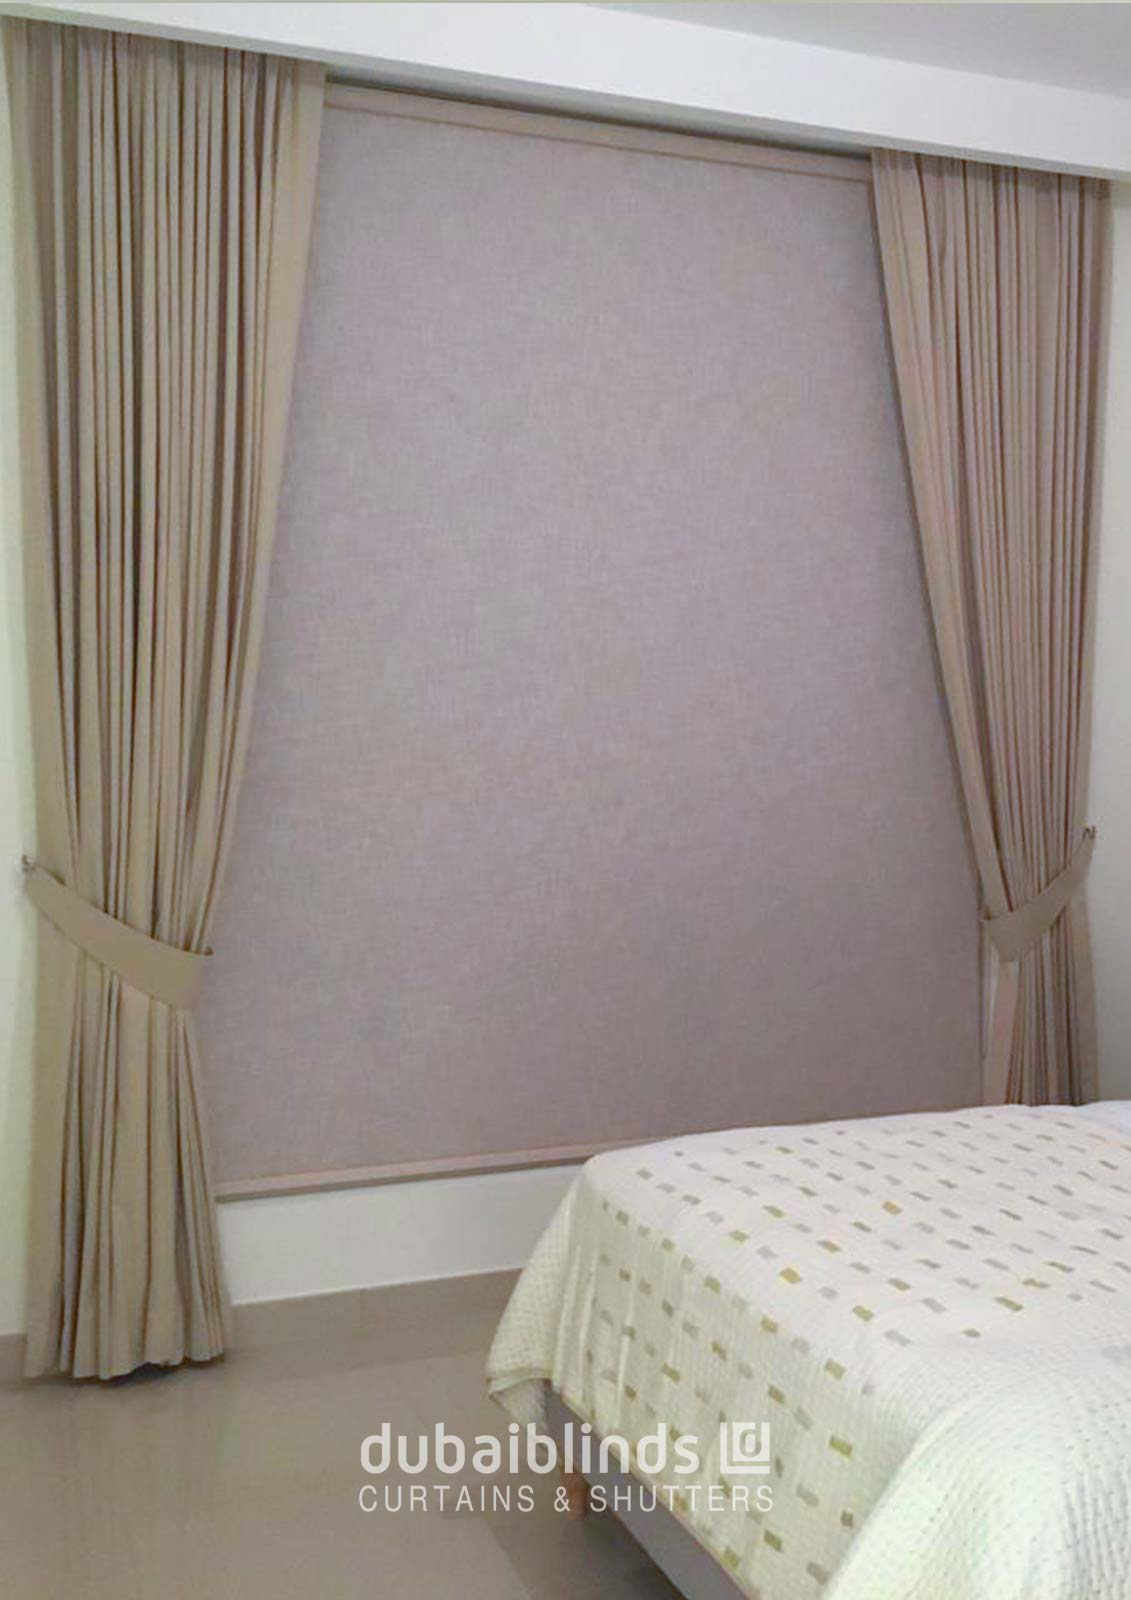 Dubai Hills Blinds & Curtains